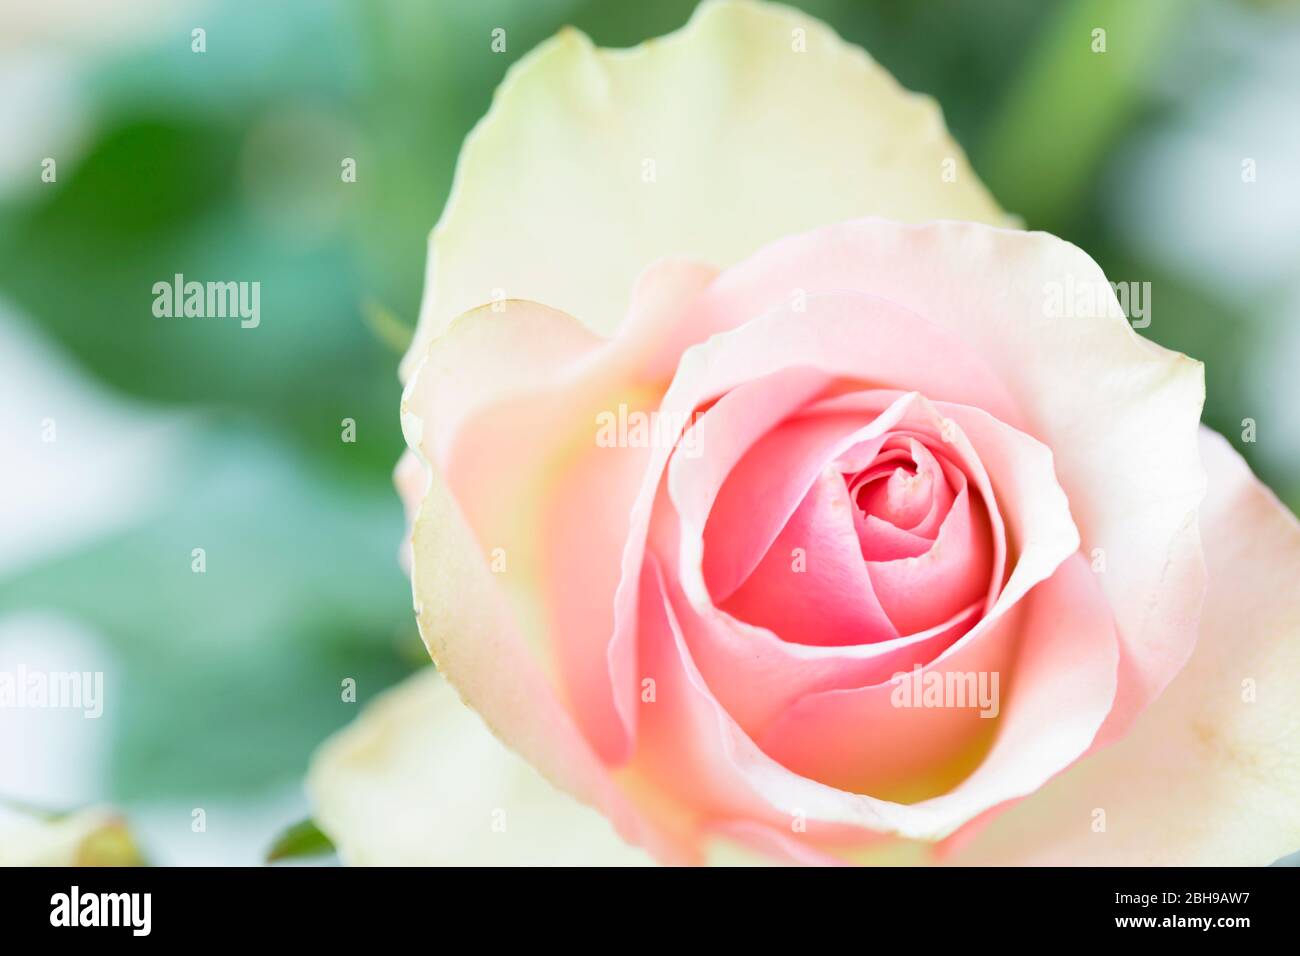 rosebud, couleur rose pastel, gros plan Banque D'Images